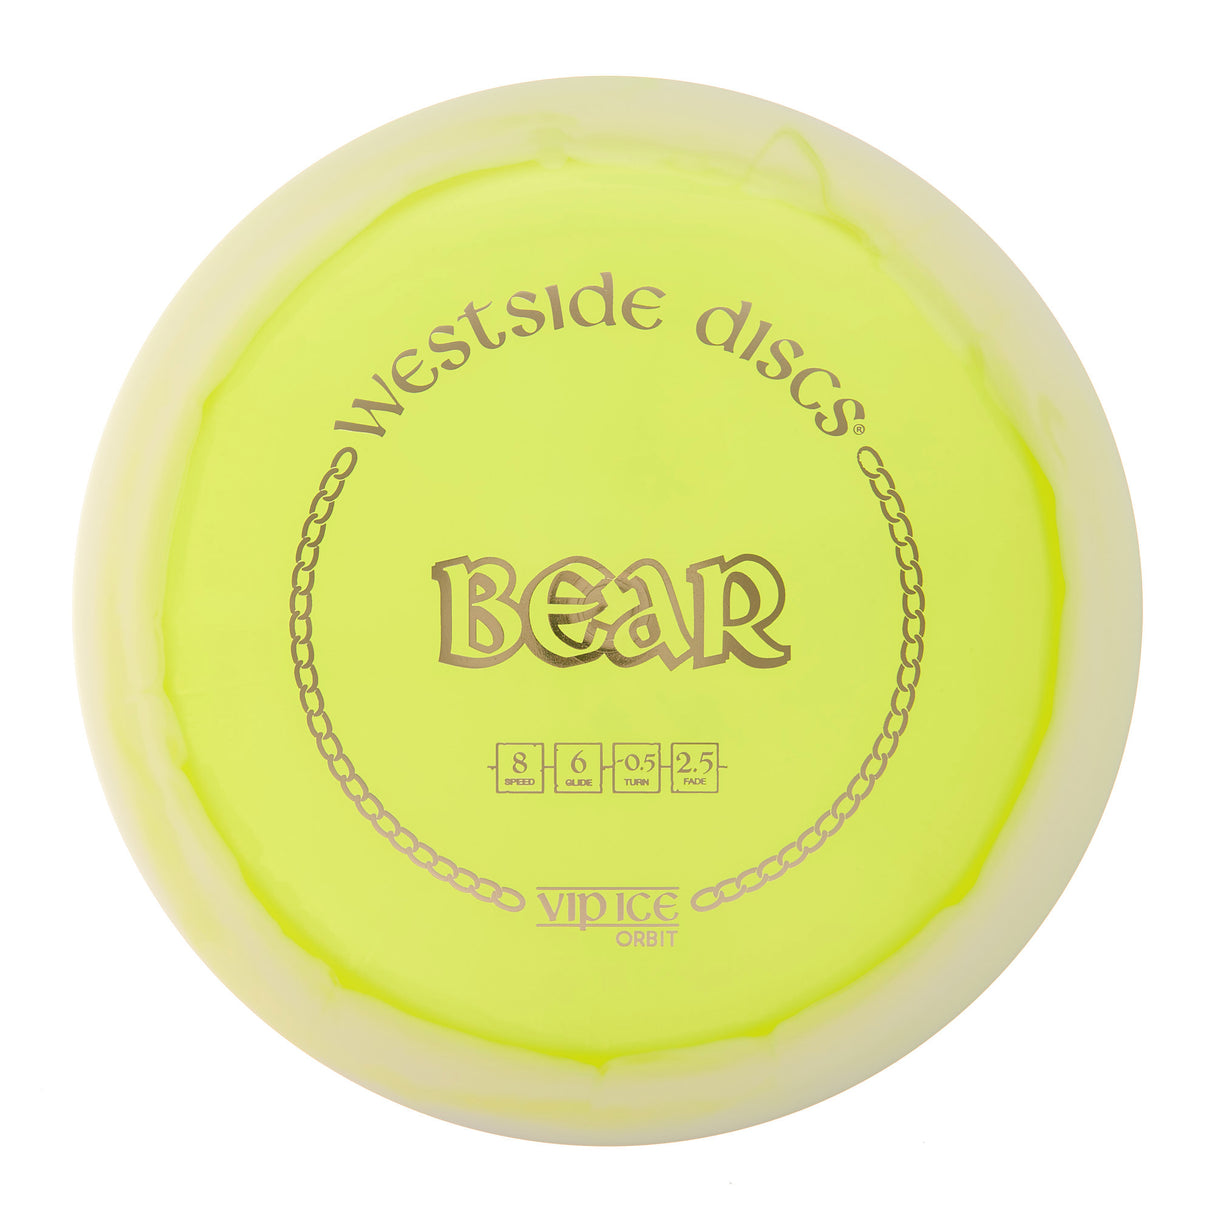 Westside Bear - VIP Ice Orbit 174g | Style 0010